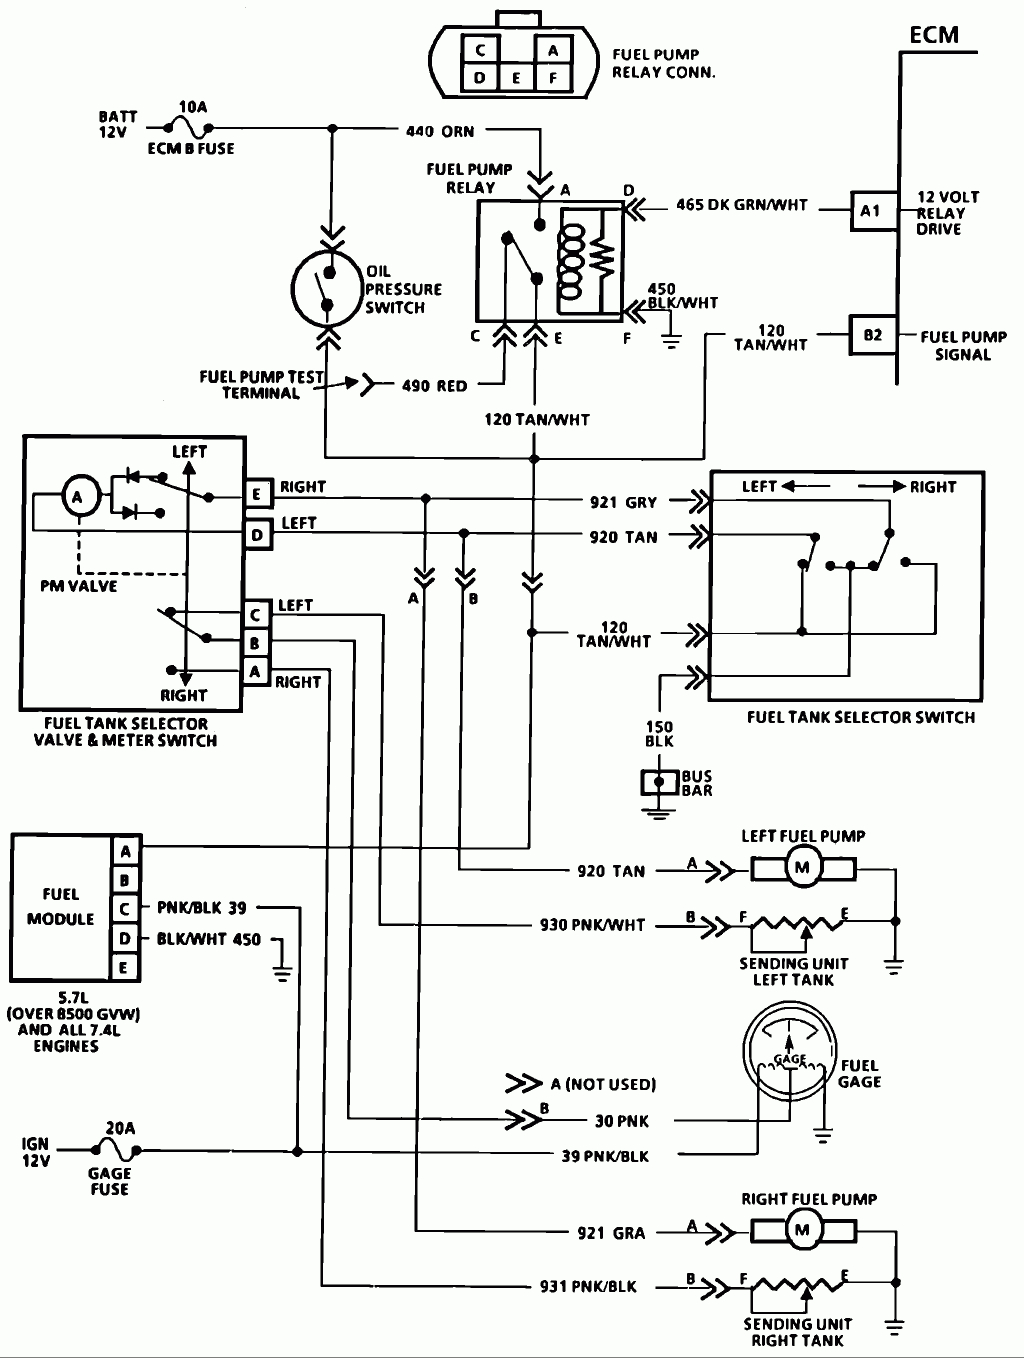 Chevy Fuel Pump Wiring | Wiring Diagram - 1989 Chevy Truck Fuel Pump Wiring Diagram